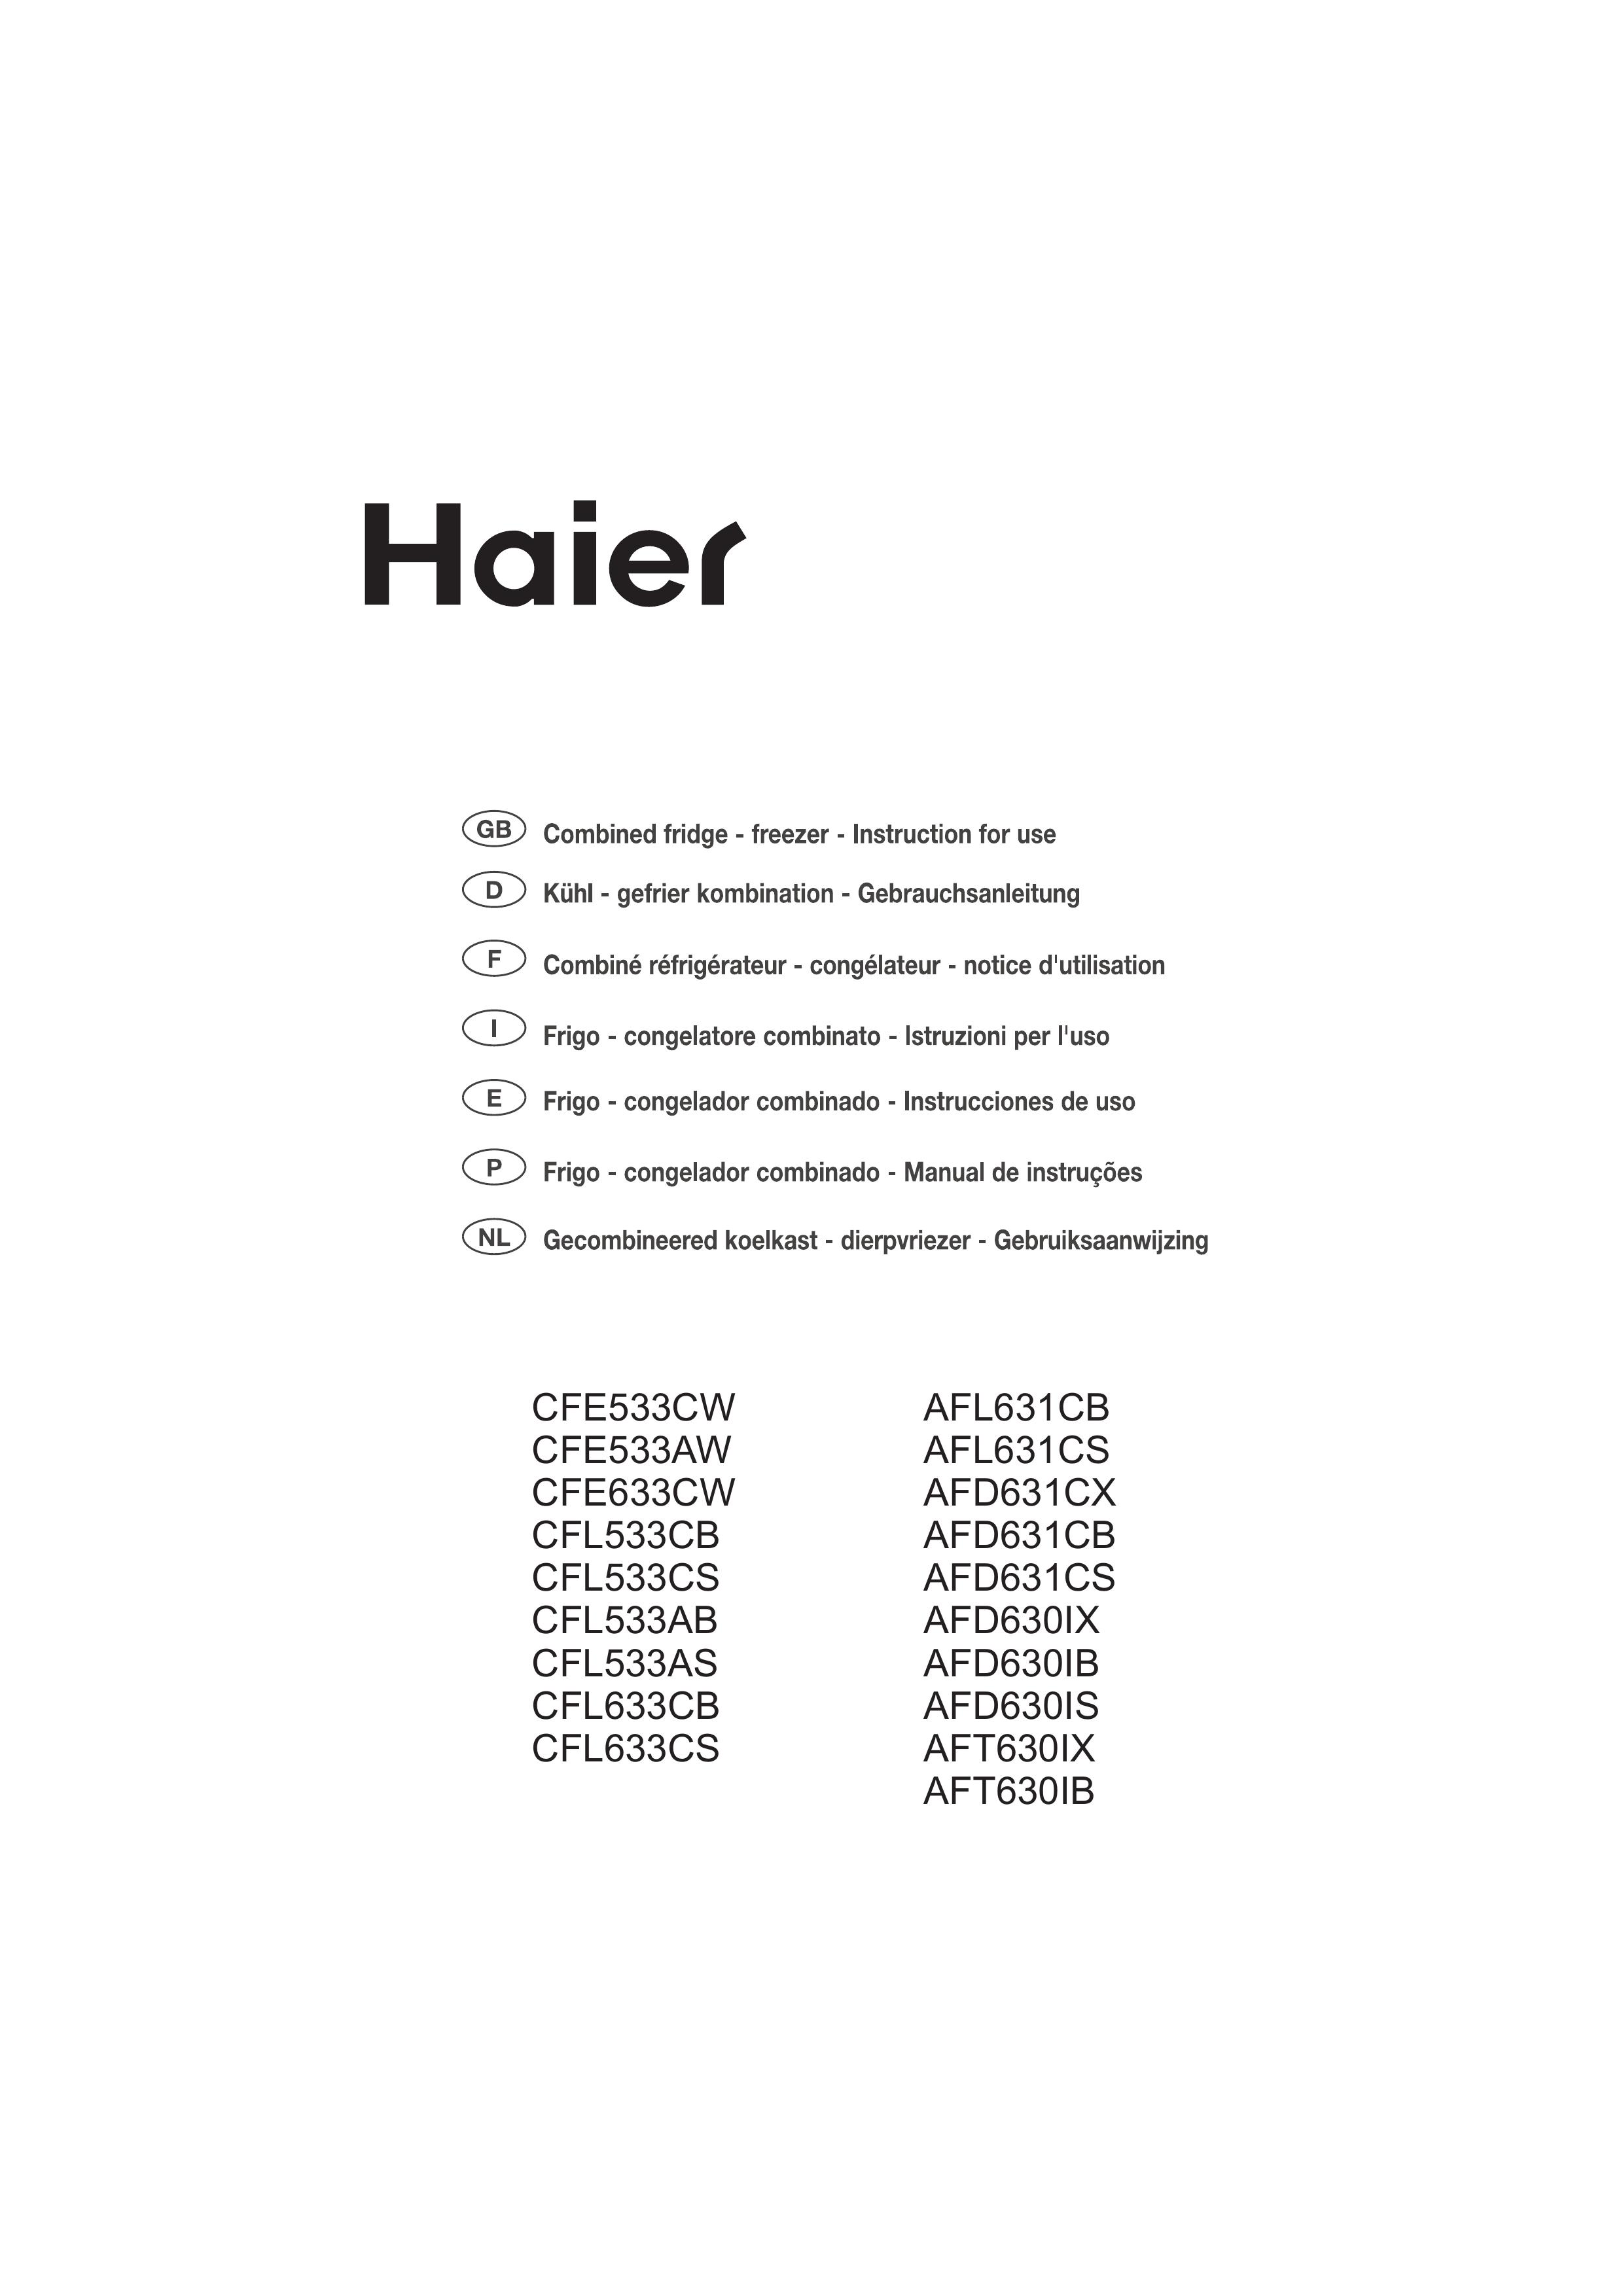 Haier AFT630IX Refrigerator User Manual